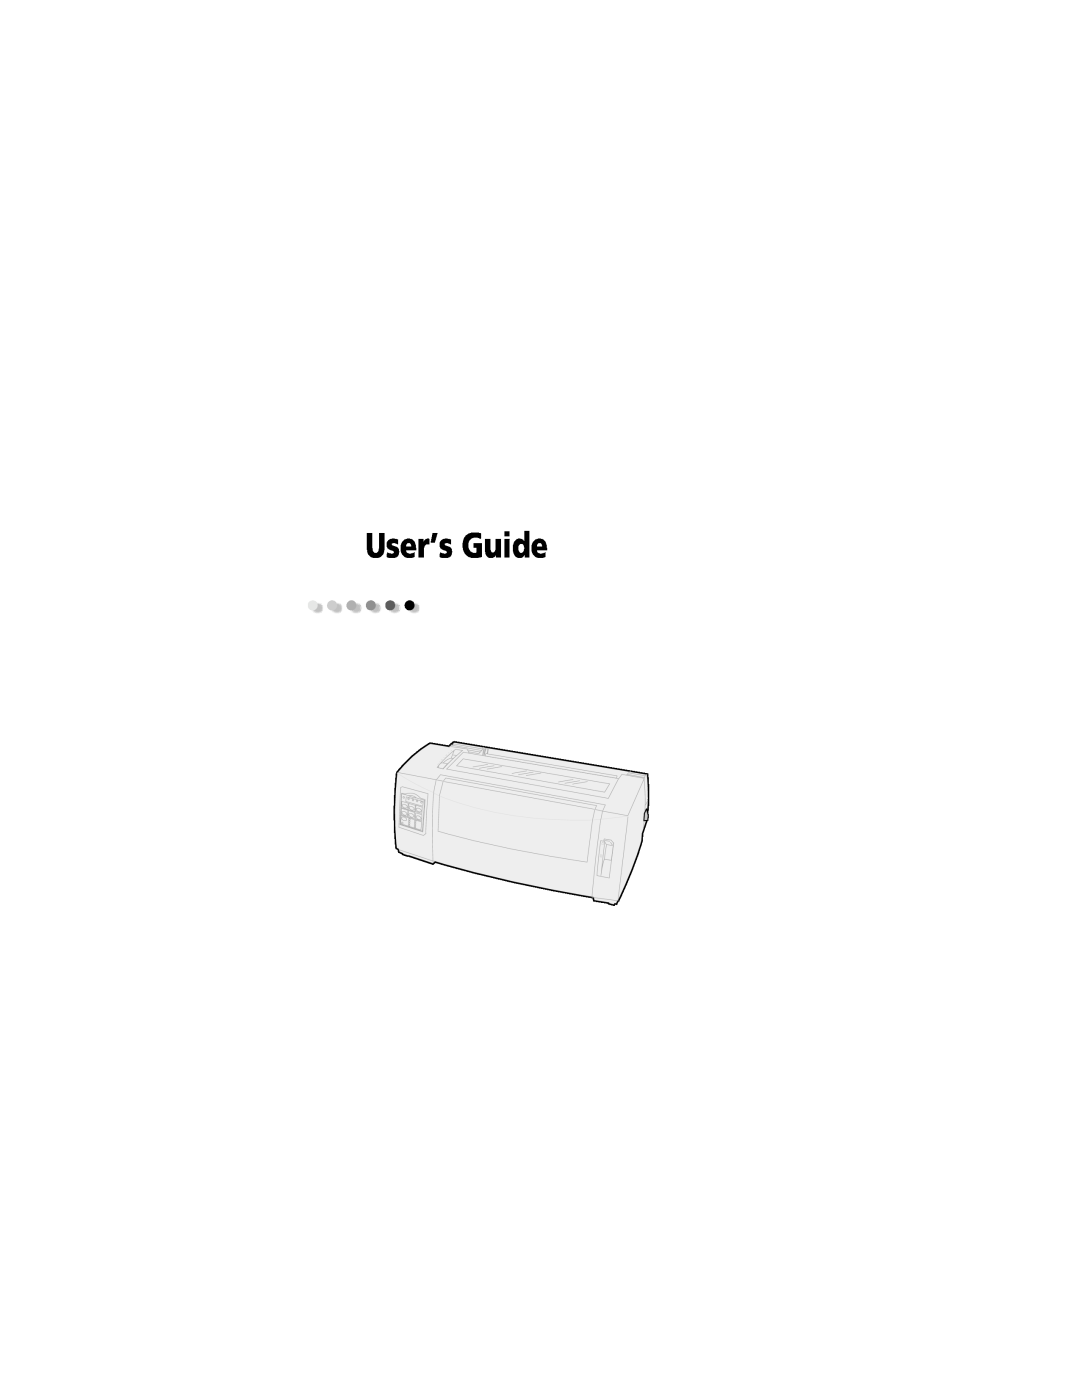 Lexmark 2480 manual User’s Guide 